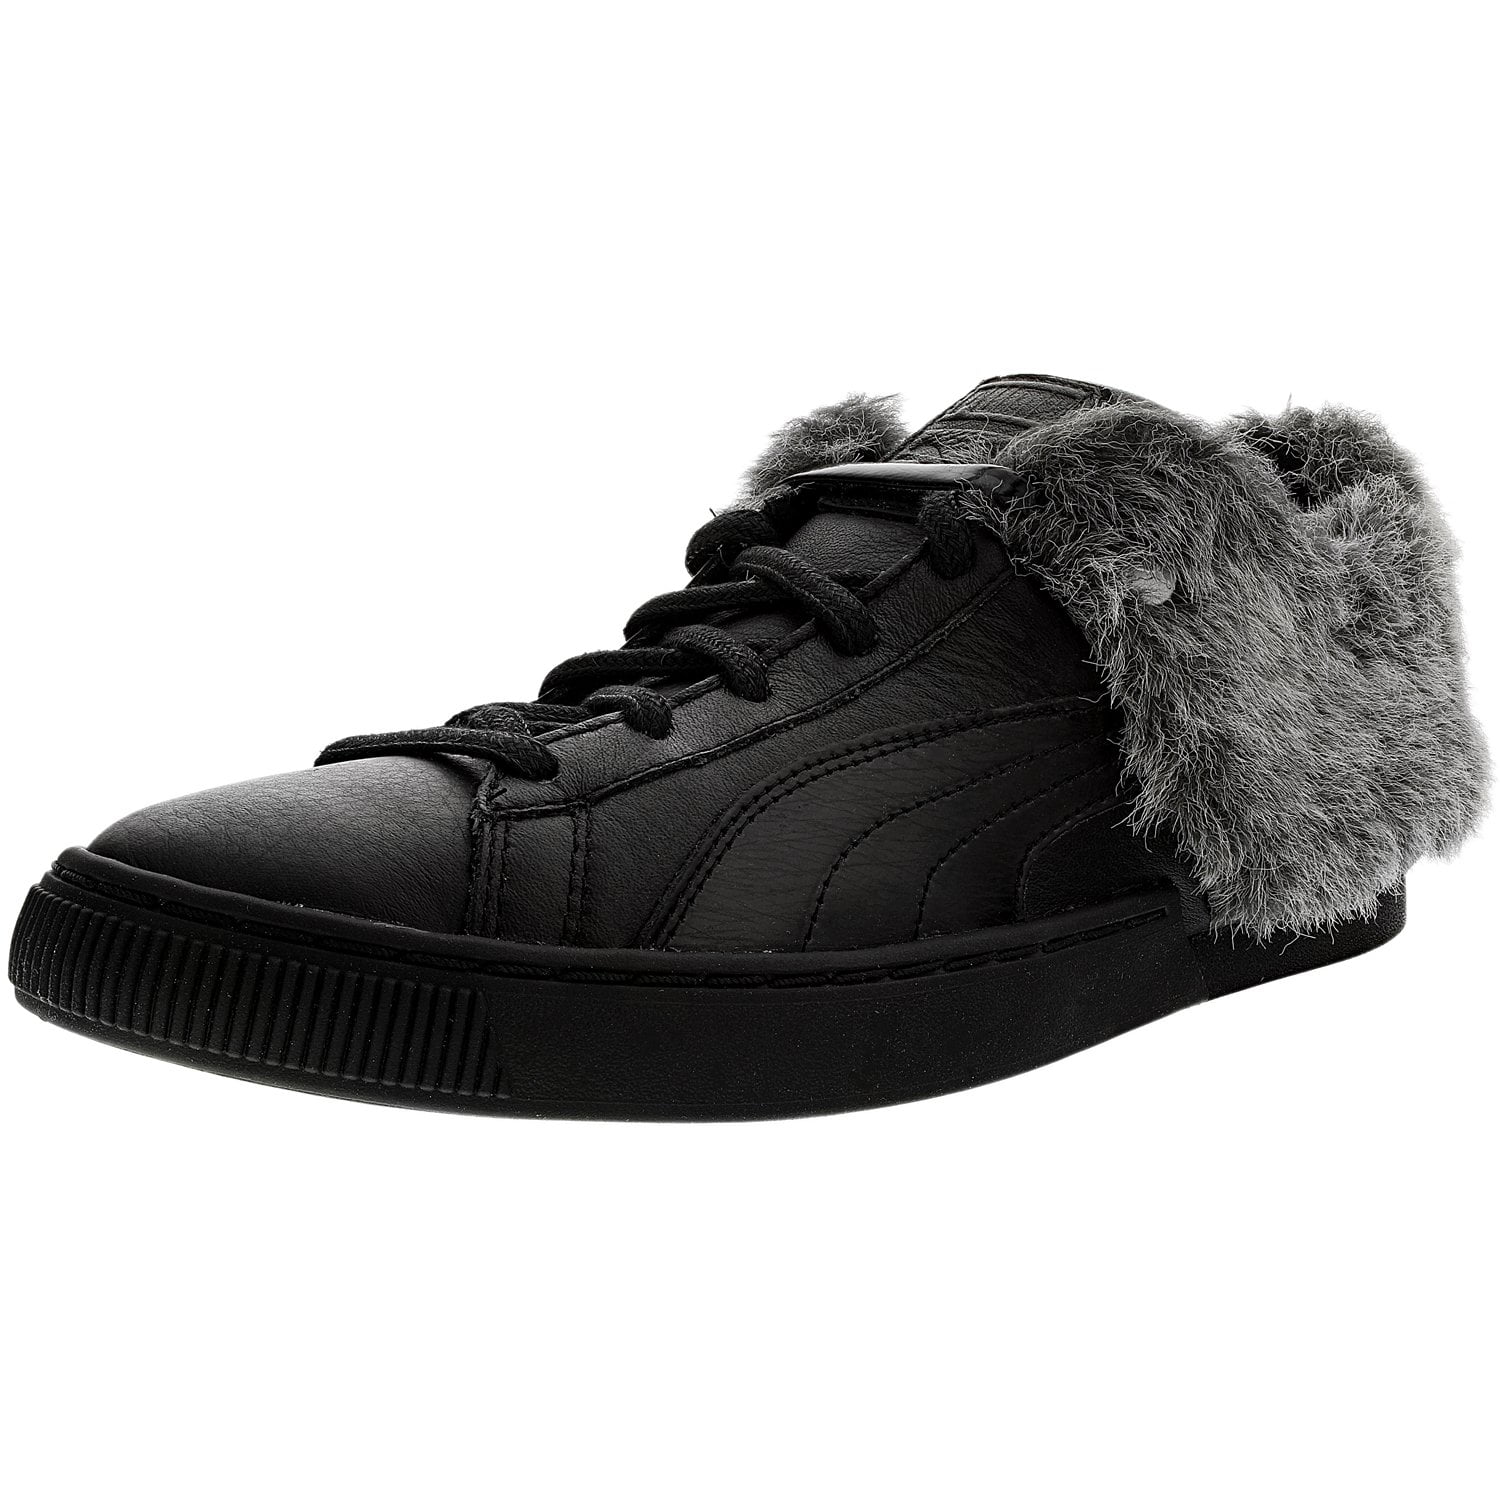 puma fur shoes black